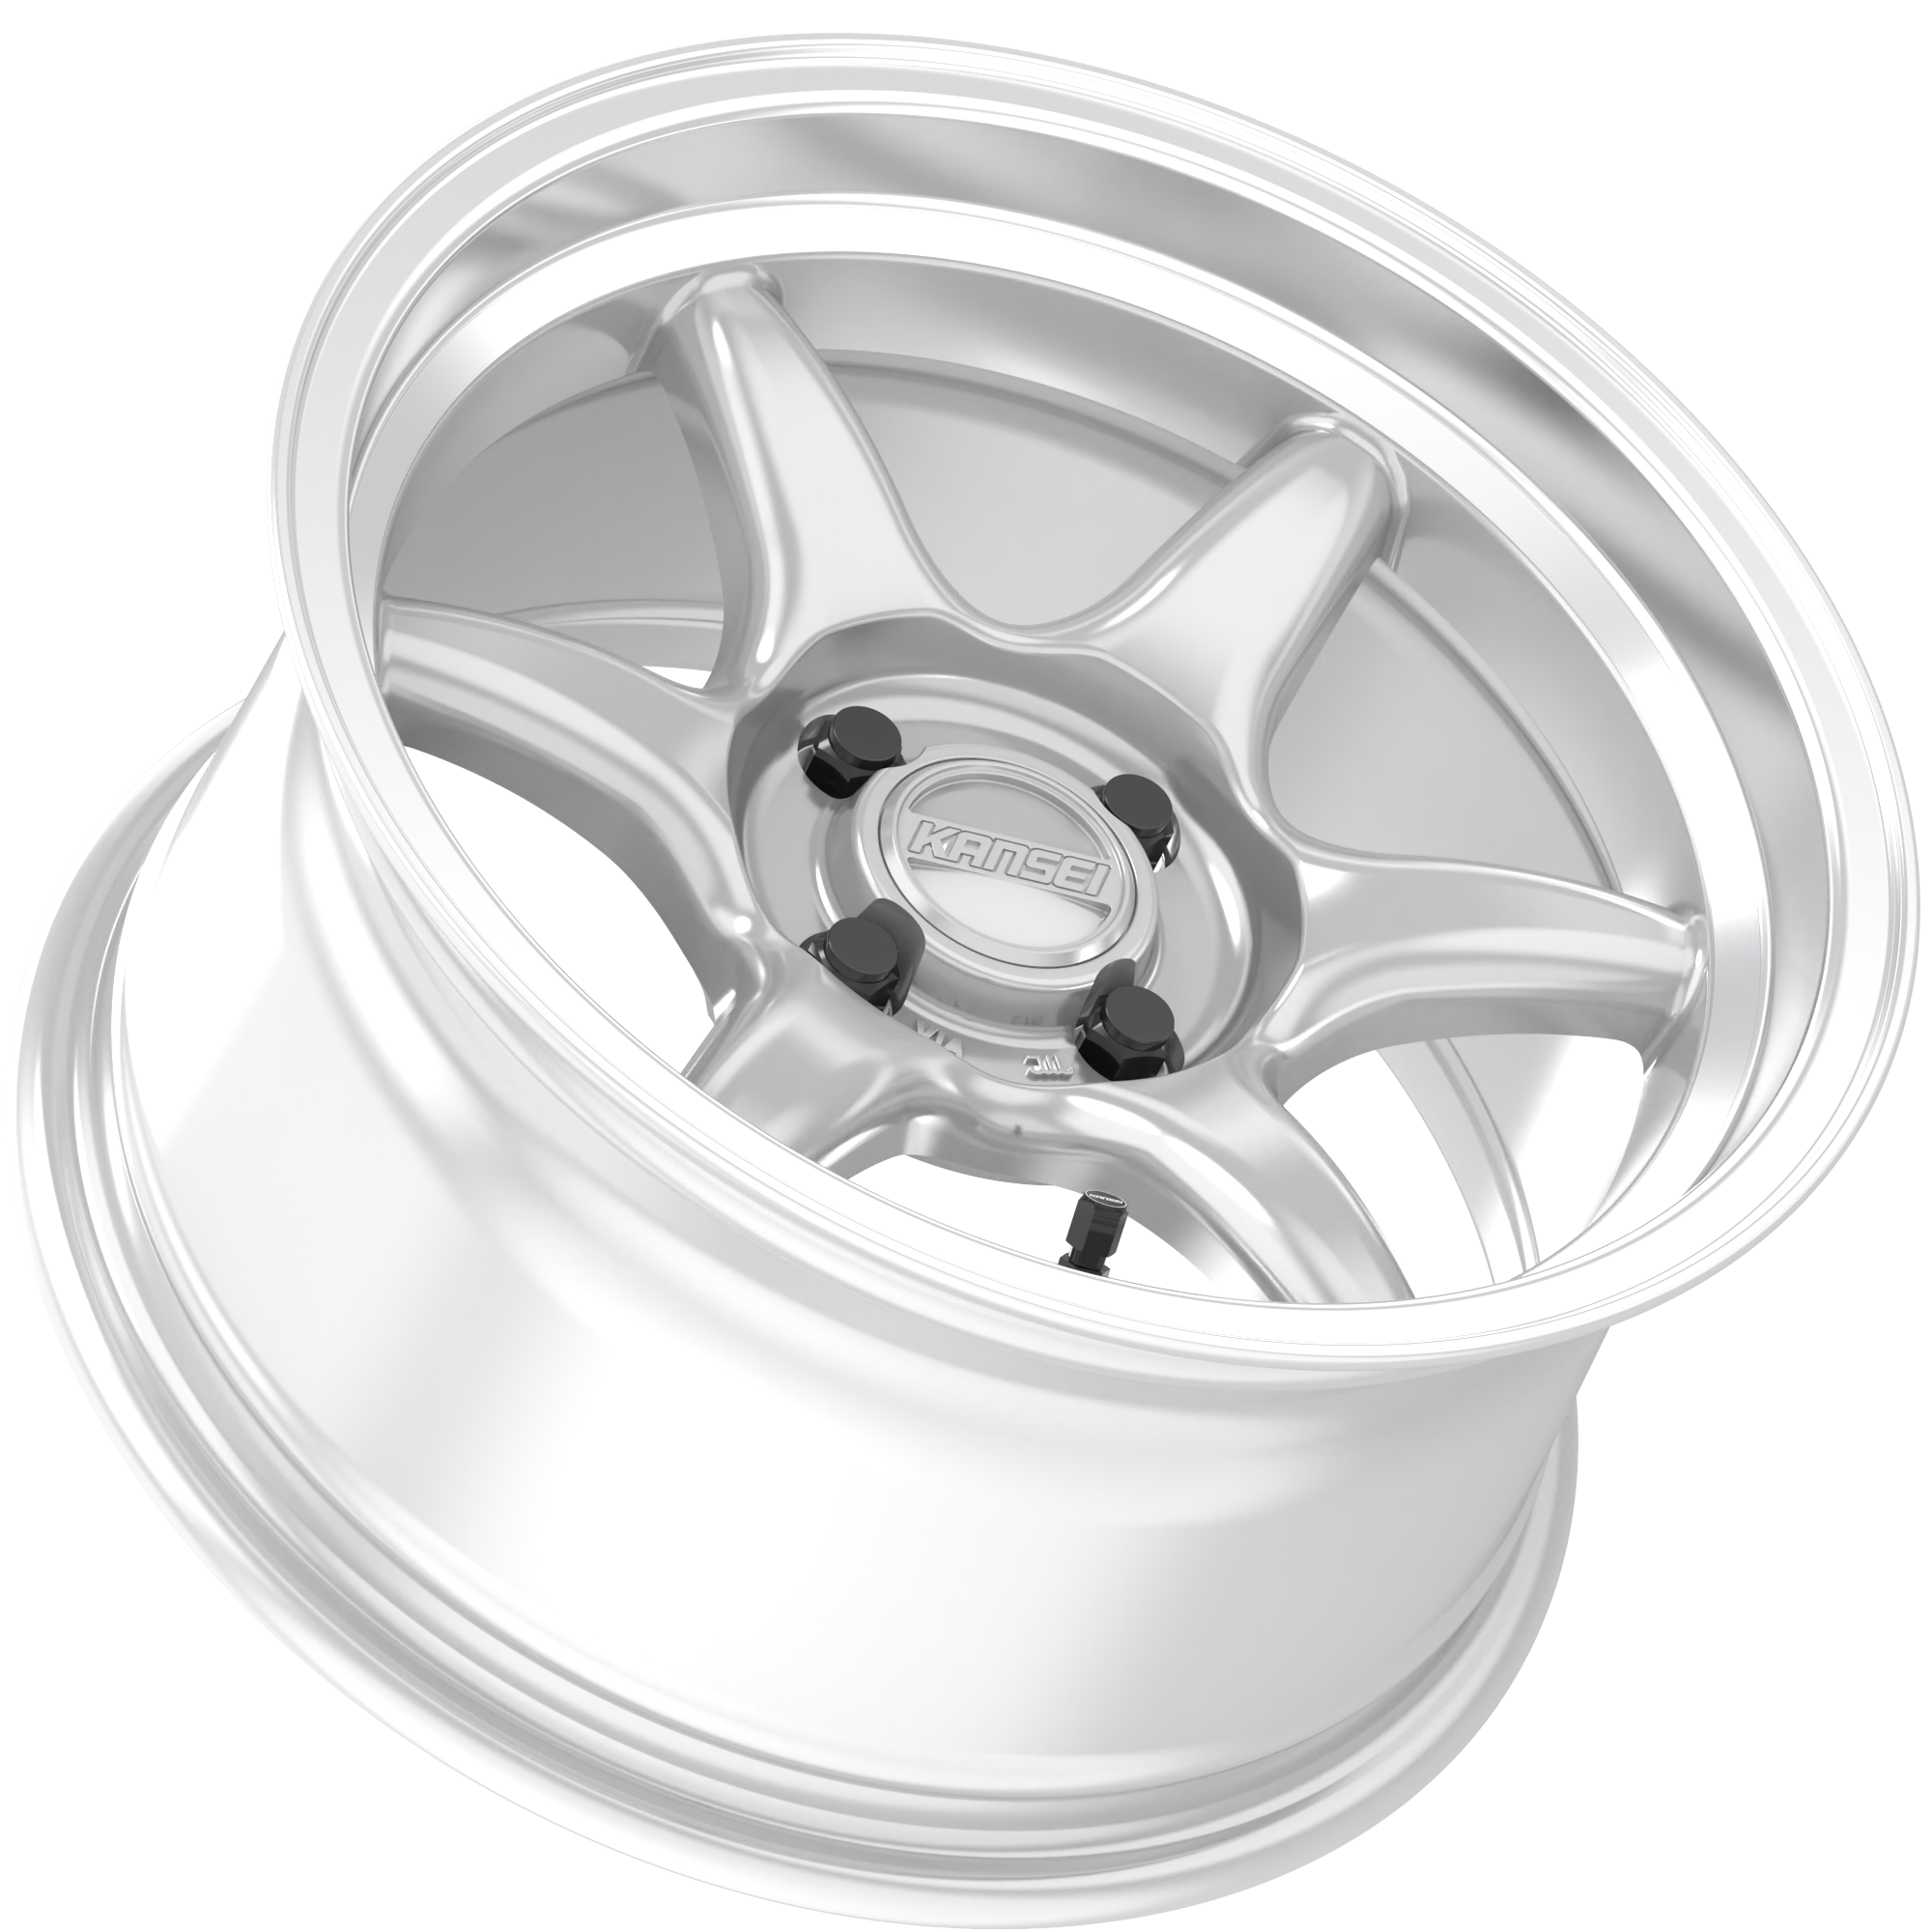 Kansei - Tandem Wheel - 15x8 +0mm - 4x100 - Hyper Silver - NextGen Tuning